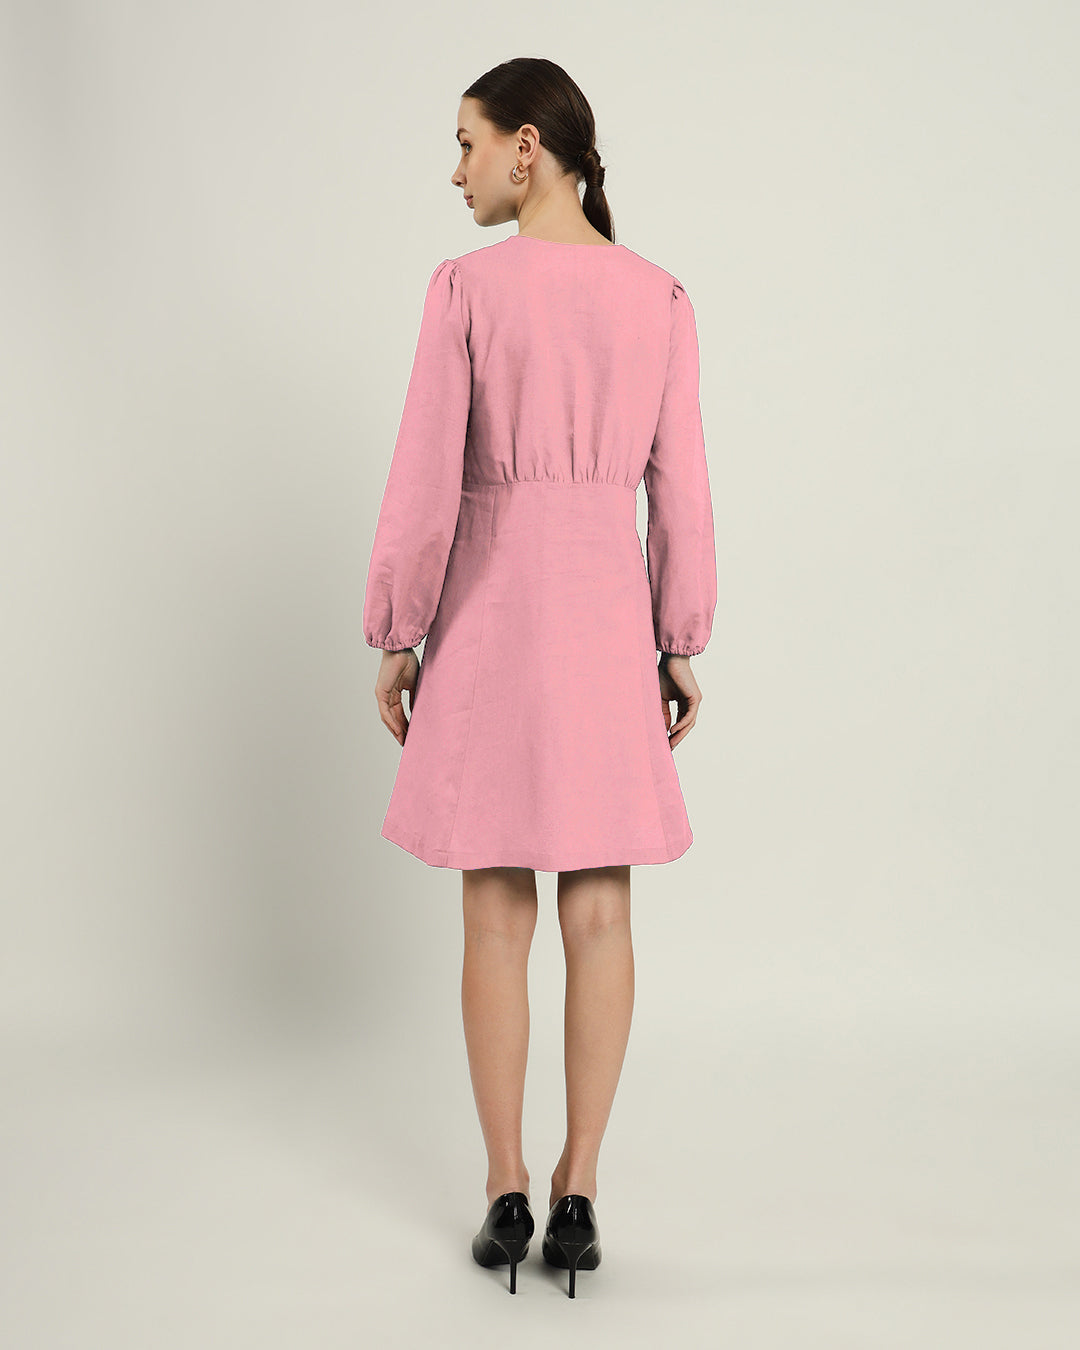 The Dafni Fondant Pink Dress